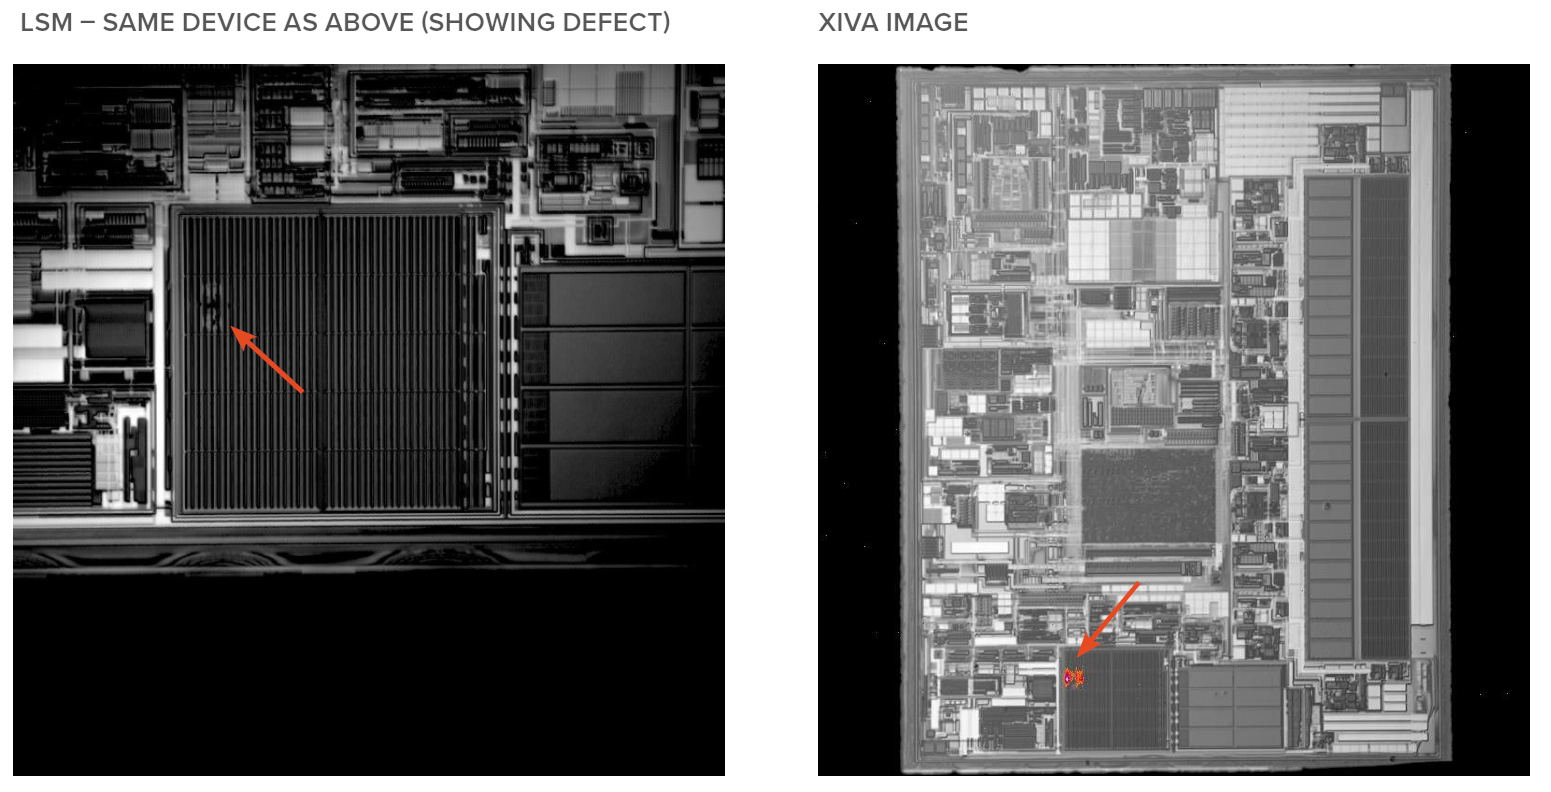 LSM  - 与上面相同的设备（显示缺陷）和XIVA图像